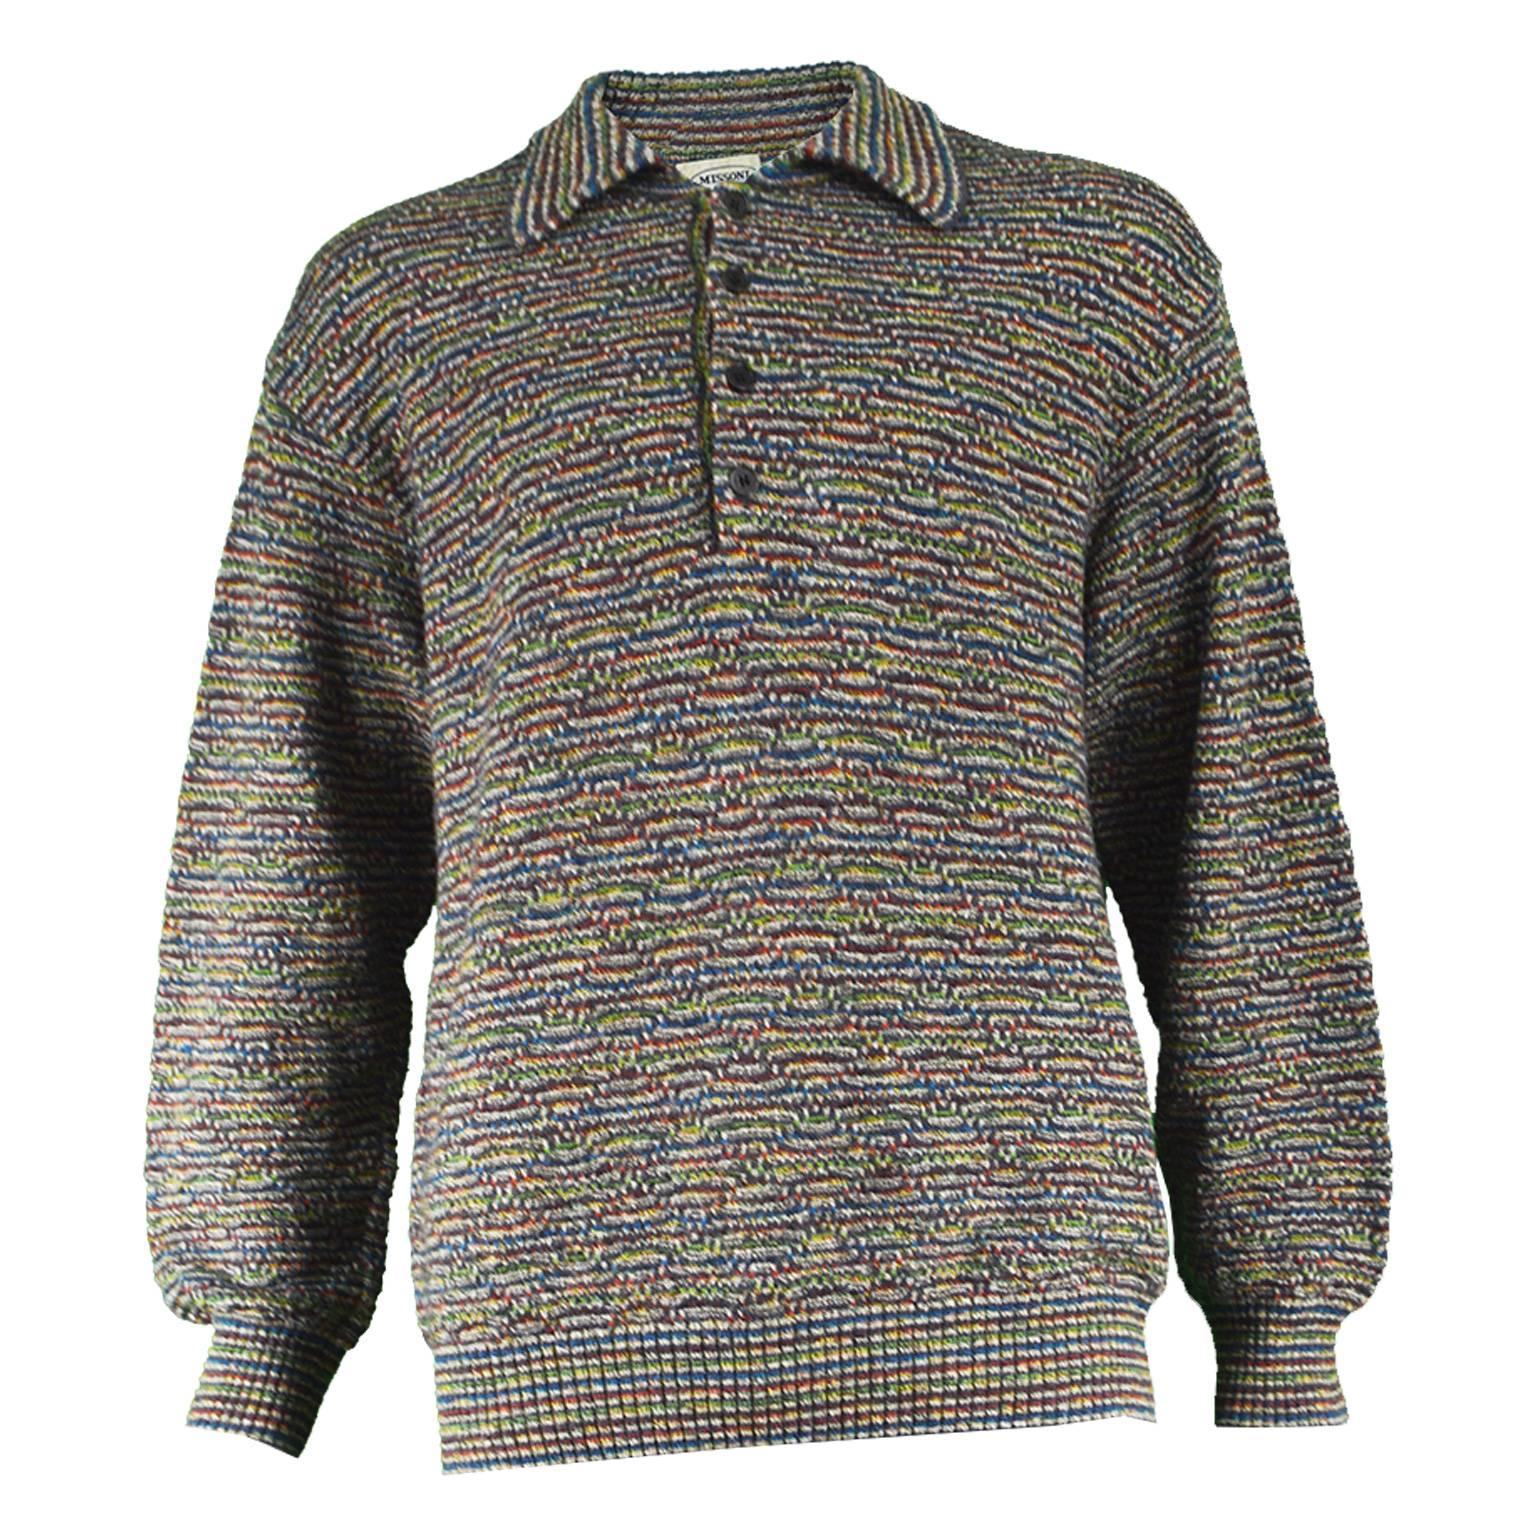 Missoni Men's Vintage Textured Wool, Acrylic & Alpaca Knit Sweater, 1990s For Sale